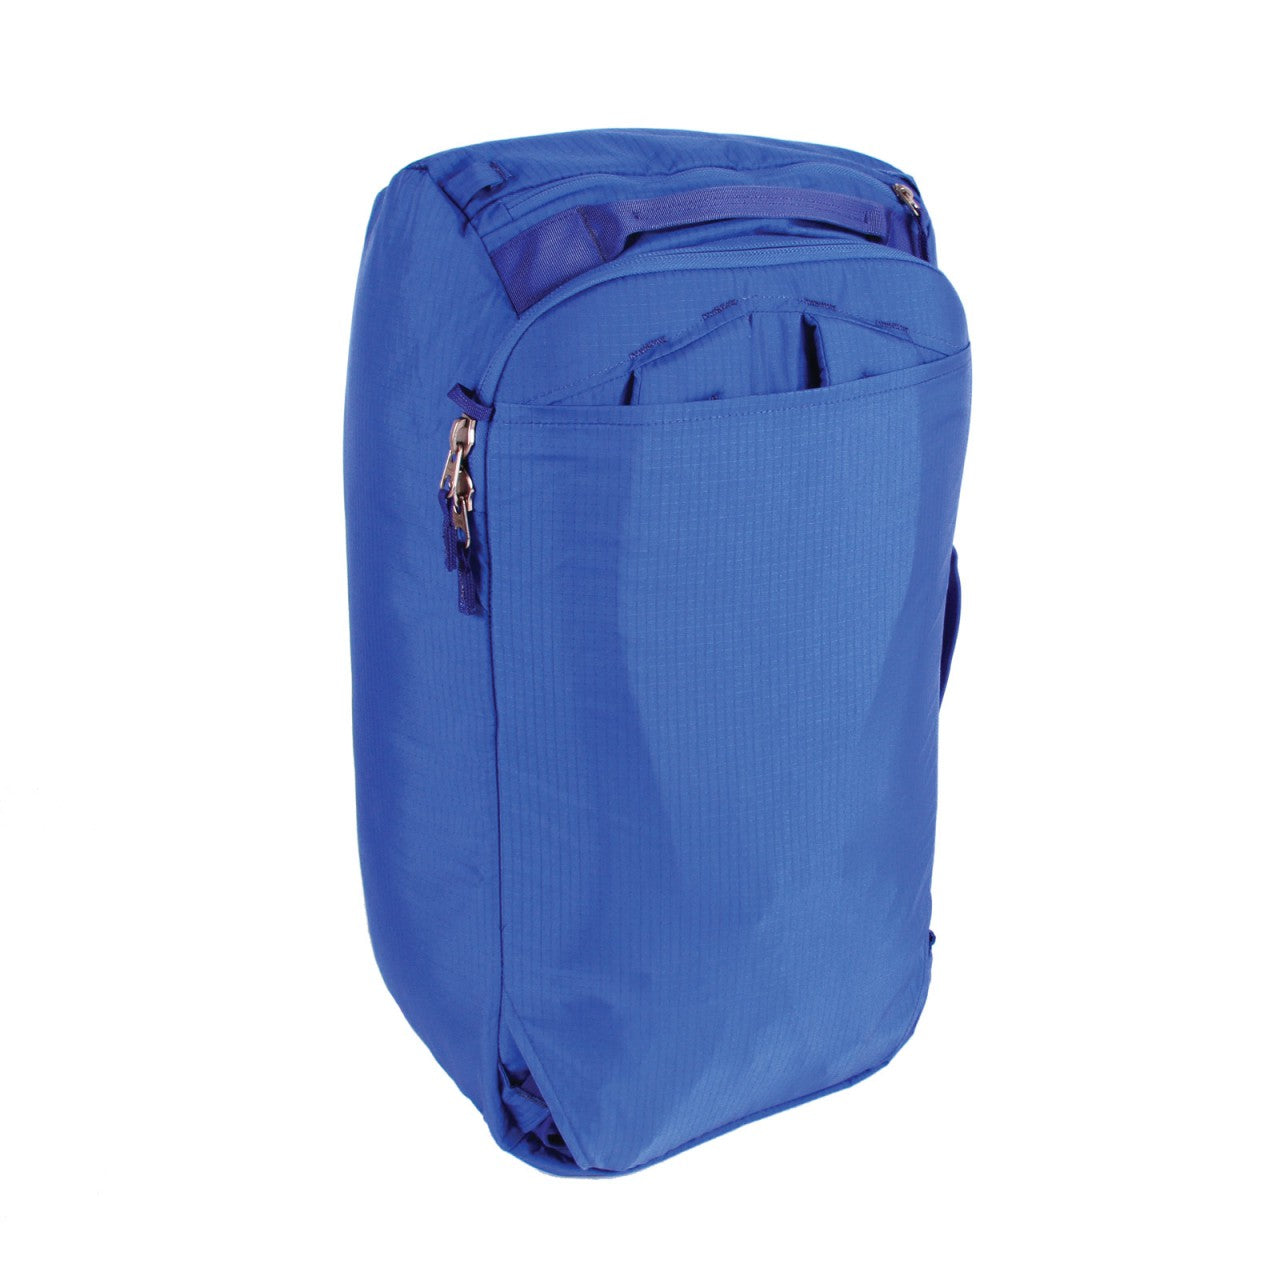 Octopus (45L) - turkish blue, climbing backpack